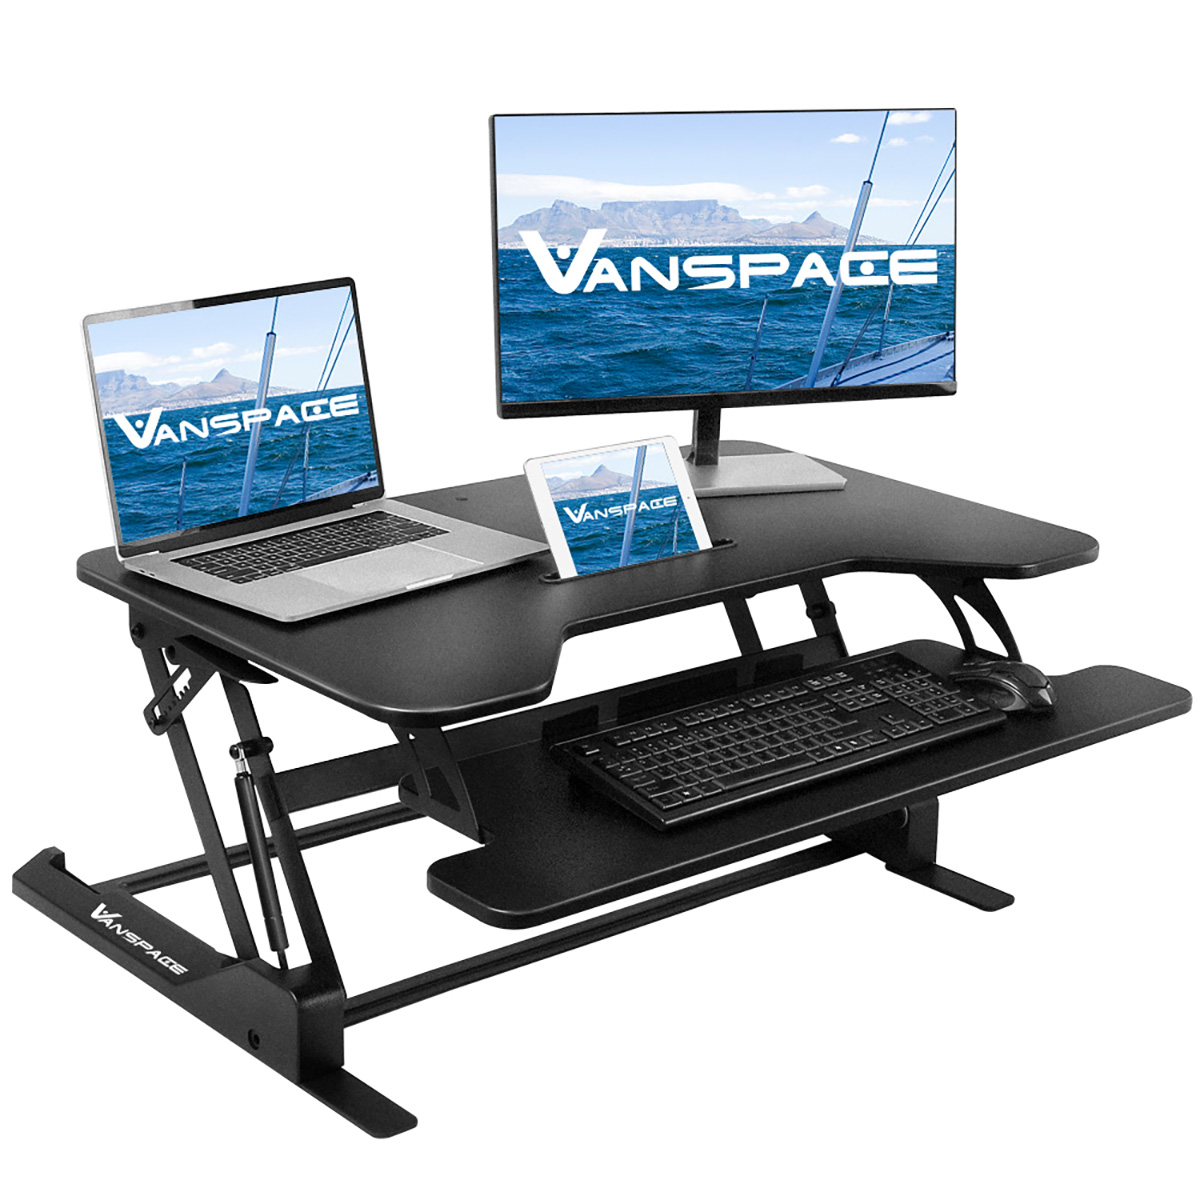 

Height Adjustable Standing Desk Sit to Stand Gas Spring Riser Converter Computer Laptop Desk Workstation fits Dual Monitor